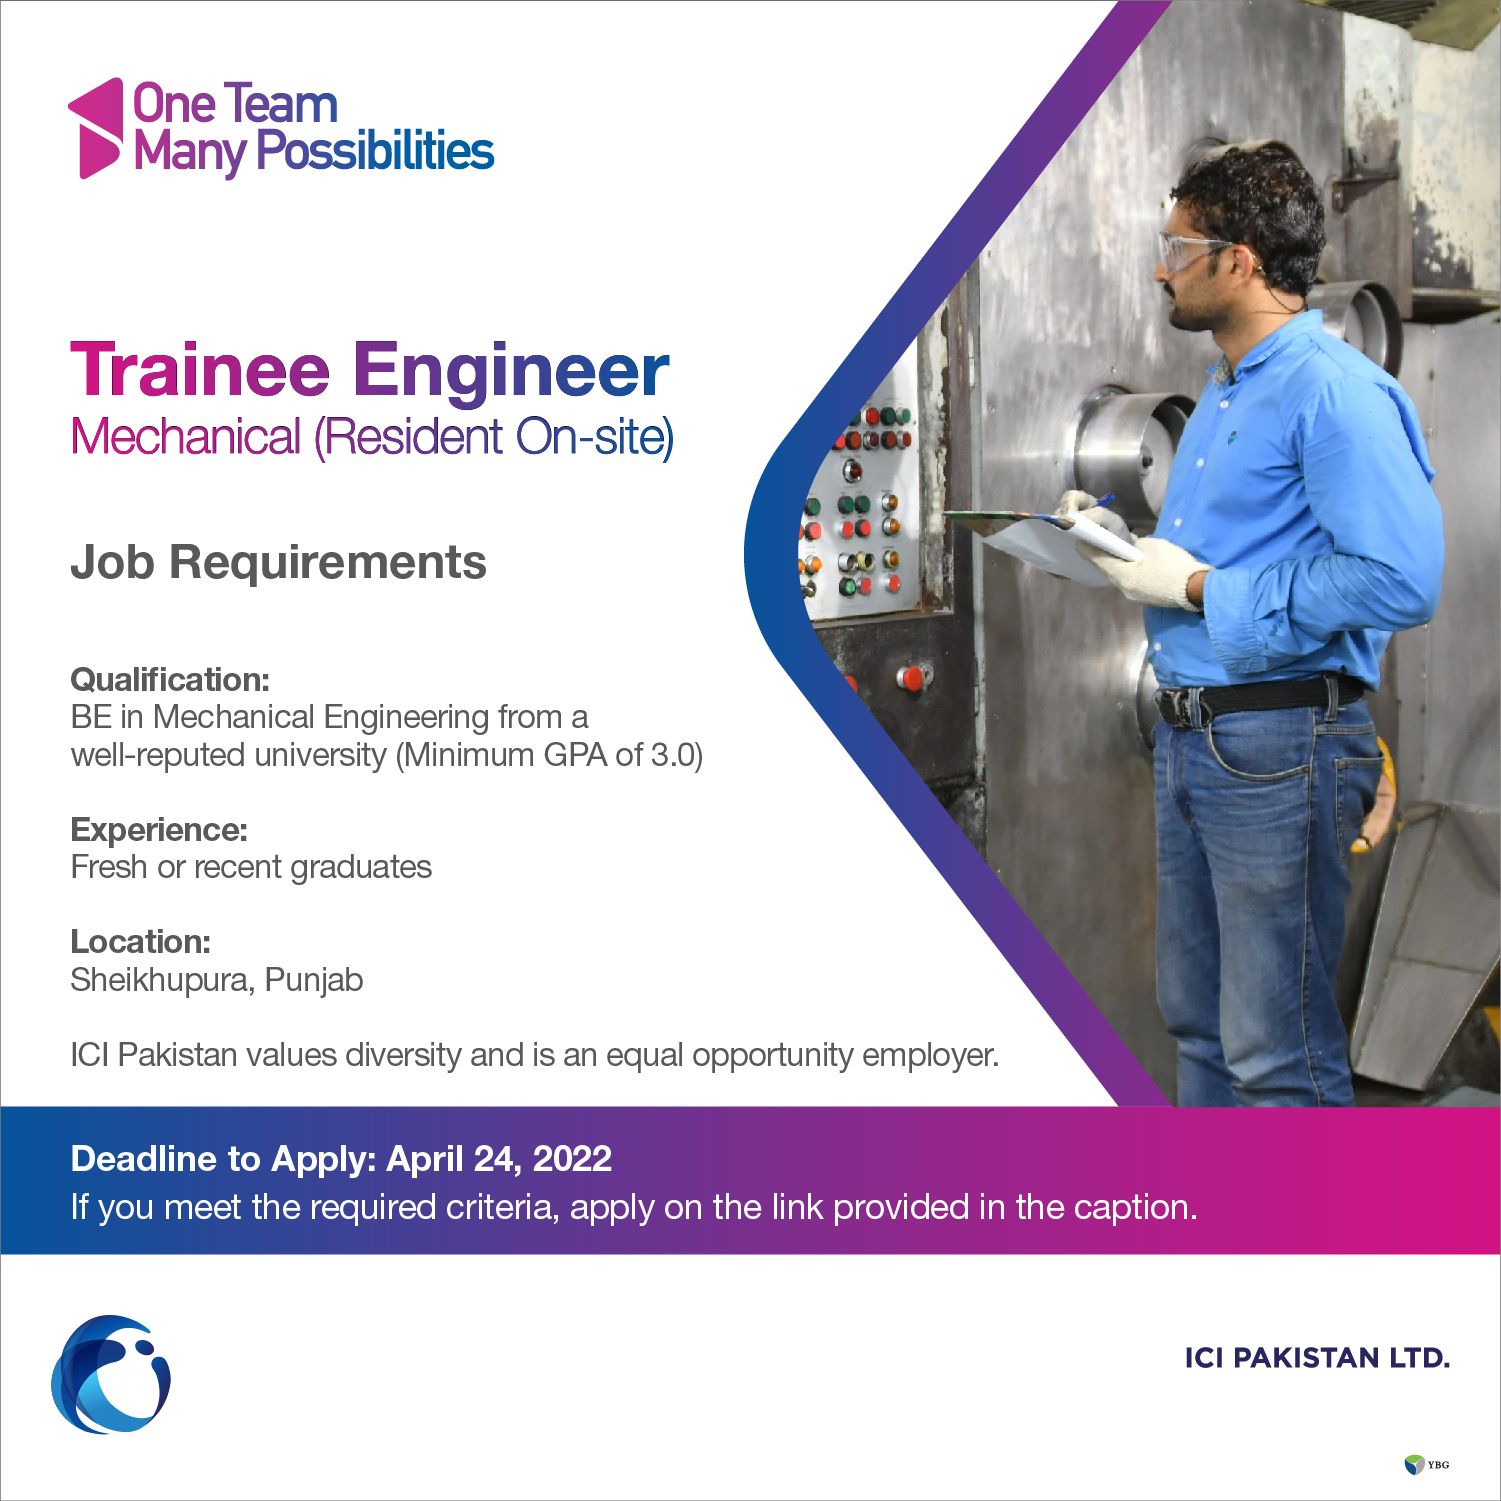 ICI Pakistan Ltd Jobs For Trainee Engineer - Mechanical